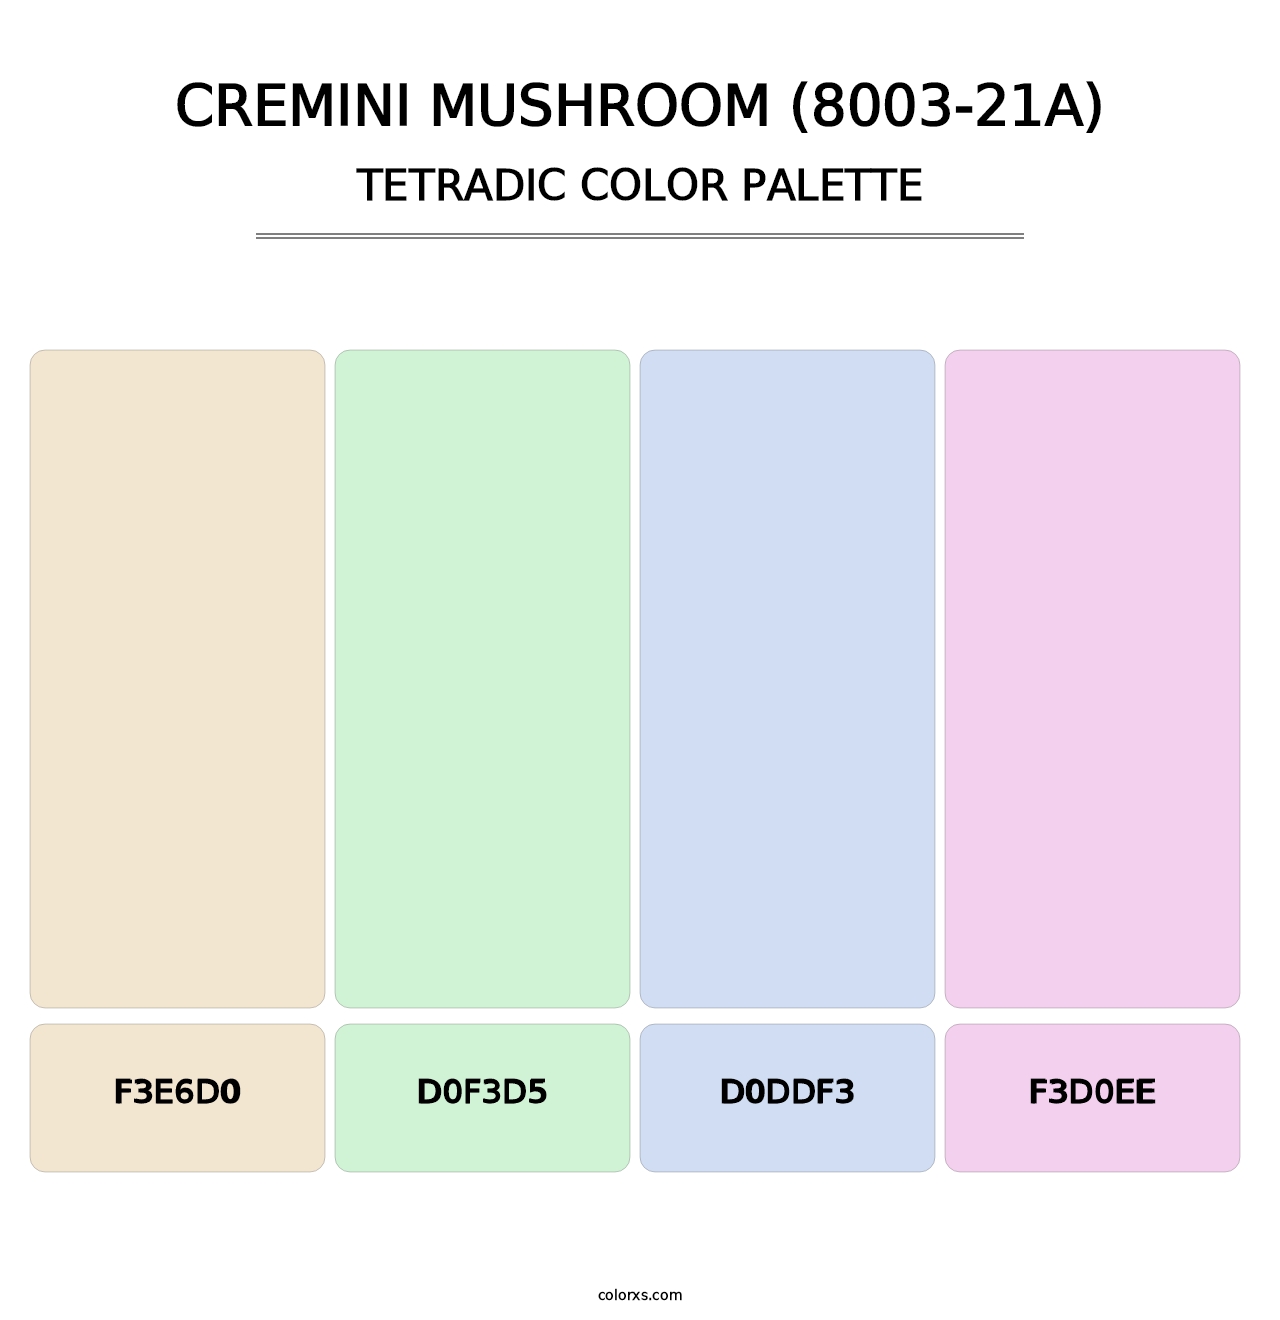 Cremini Mushroom (8003-21A) - Tetradic Color Palette